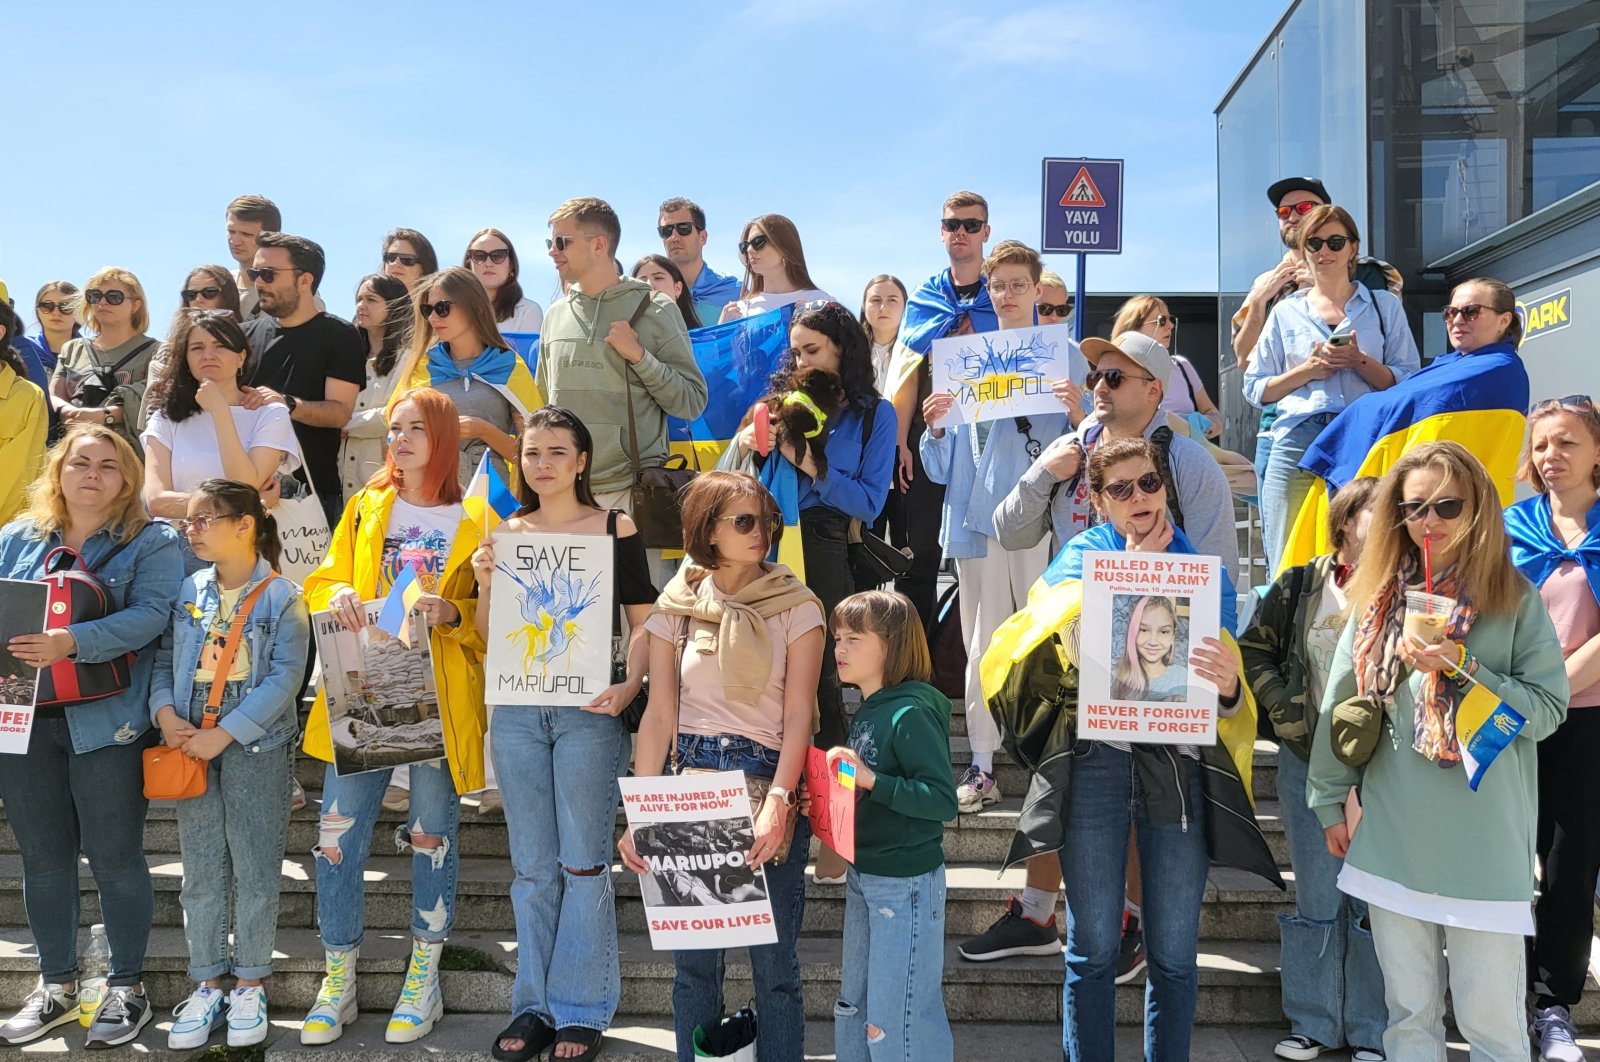 Ukrainian demonstrators holding banners protest the Ukraine-Russia war in Beyoğlu, Istanbul, Turkey, May 7, 2022. (İHA Photo)